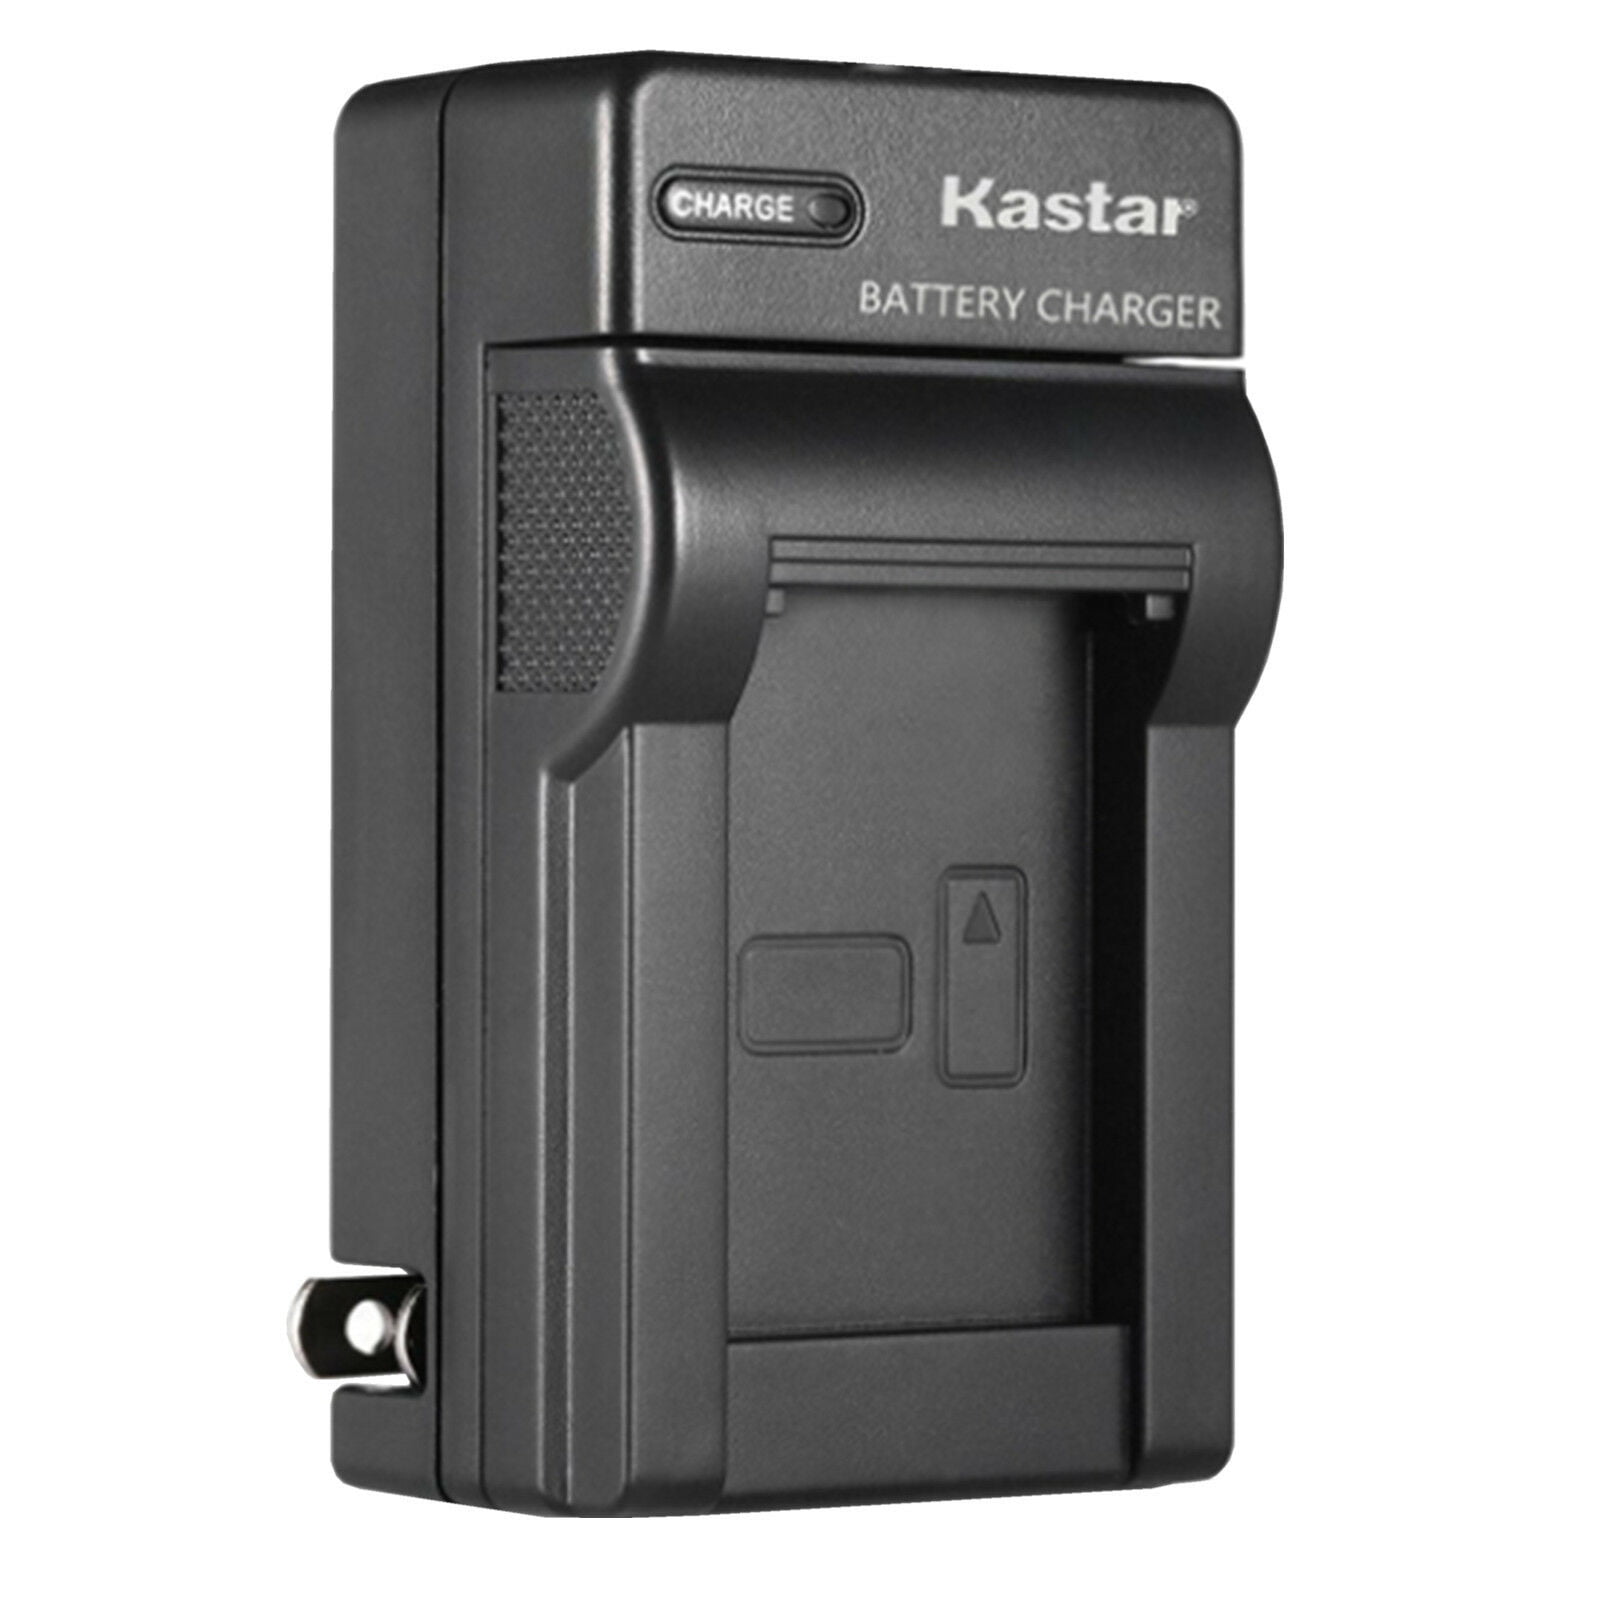 Ik geloof zingen pint Kastar AC Wall Battery Charger Replacement for Medion Life Maginon SZ 24,  E43011, E44007, E44033, E44041, E44050, E44056, P42002, P43001, P43005,  P43007, P43008, P43028, P43080 Cameras - Walmart.com